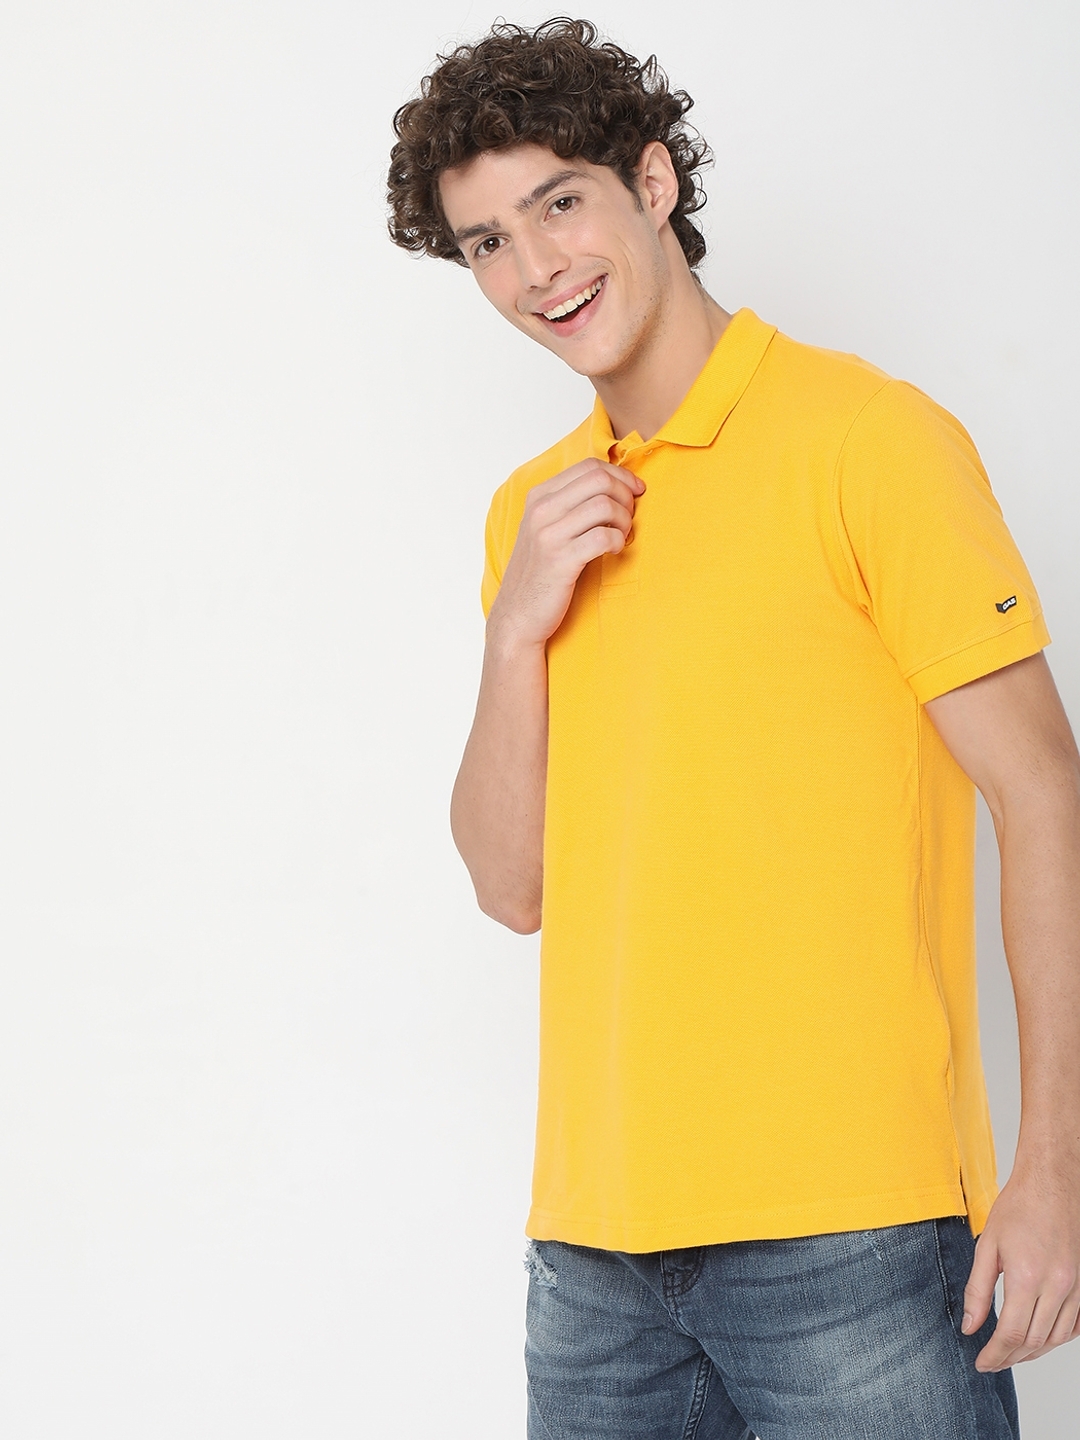 Ralph Basic Golden Yellow Cotton Polo T-shirt